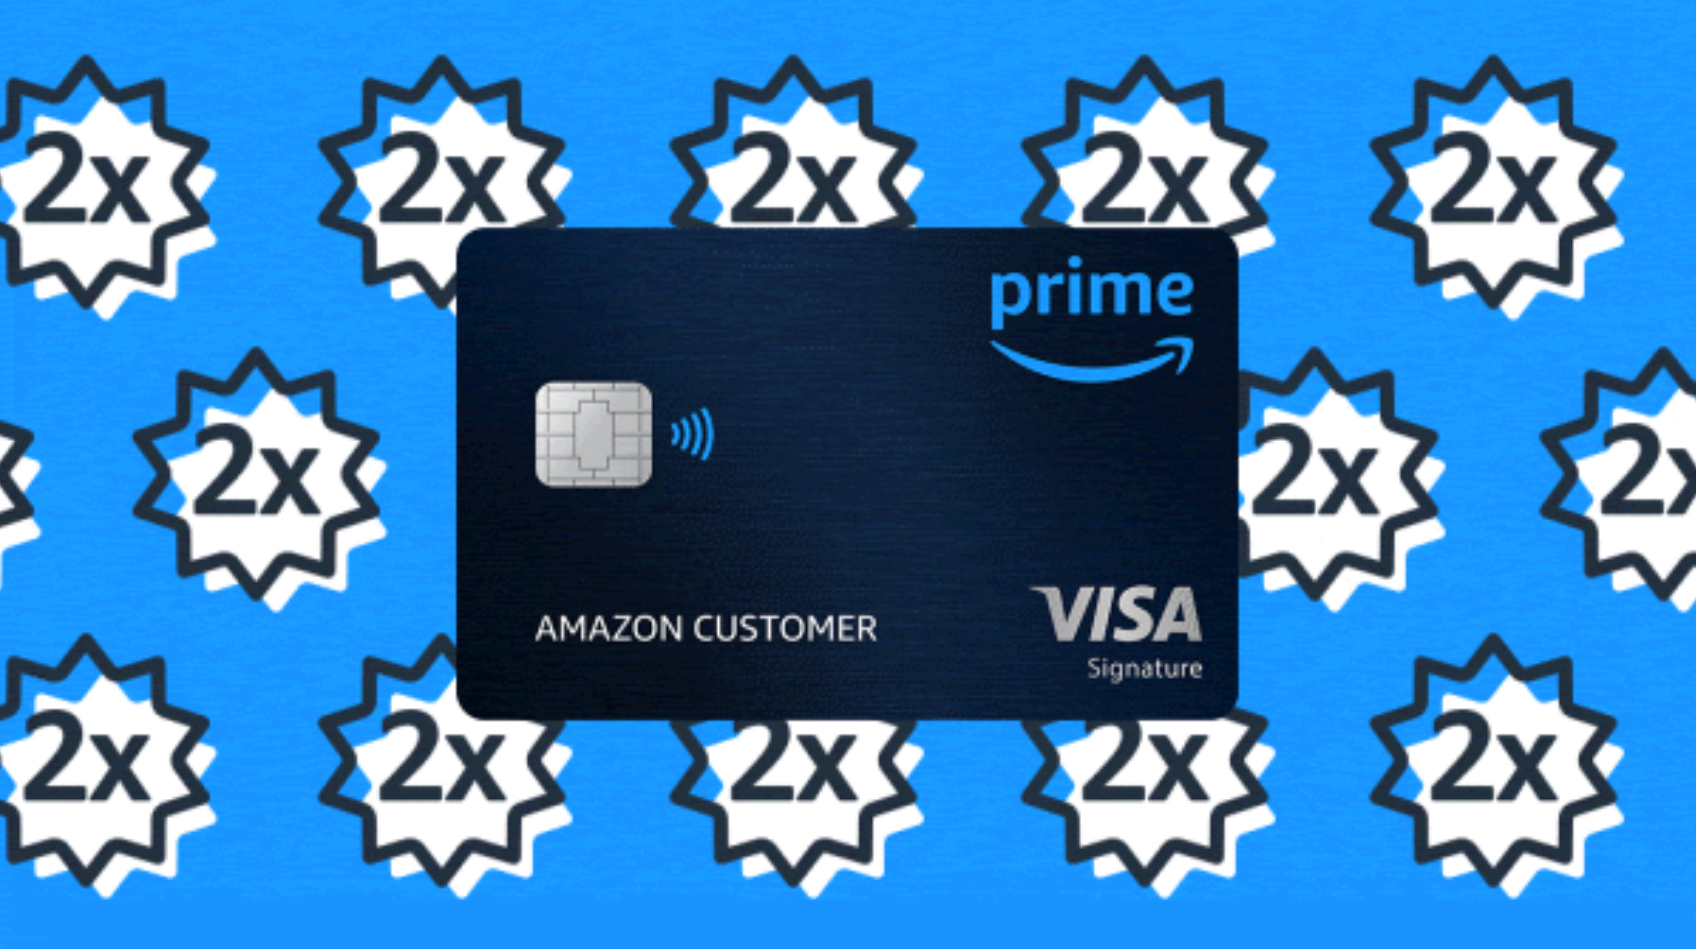 Amazon Prime Rewards Card - Double Rewards [Expired]